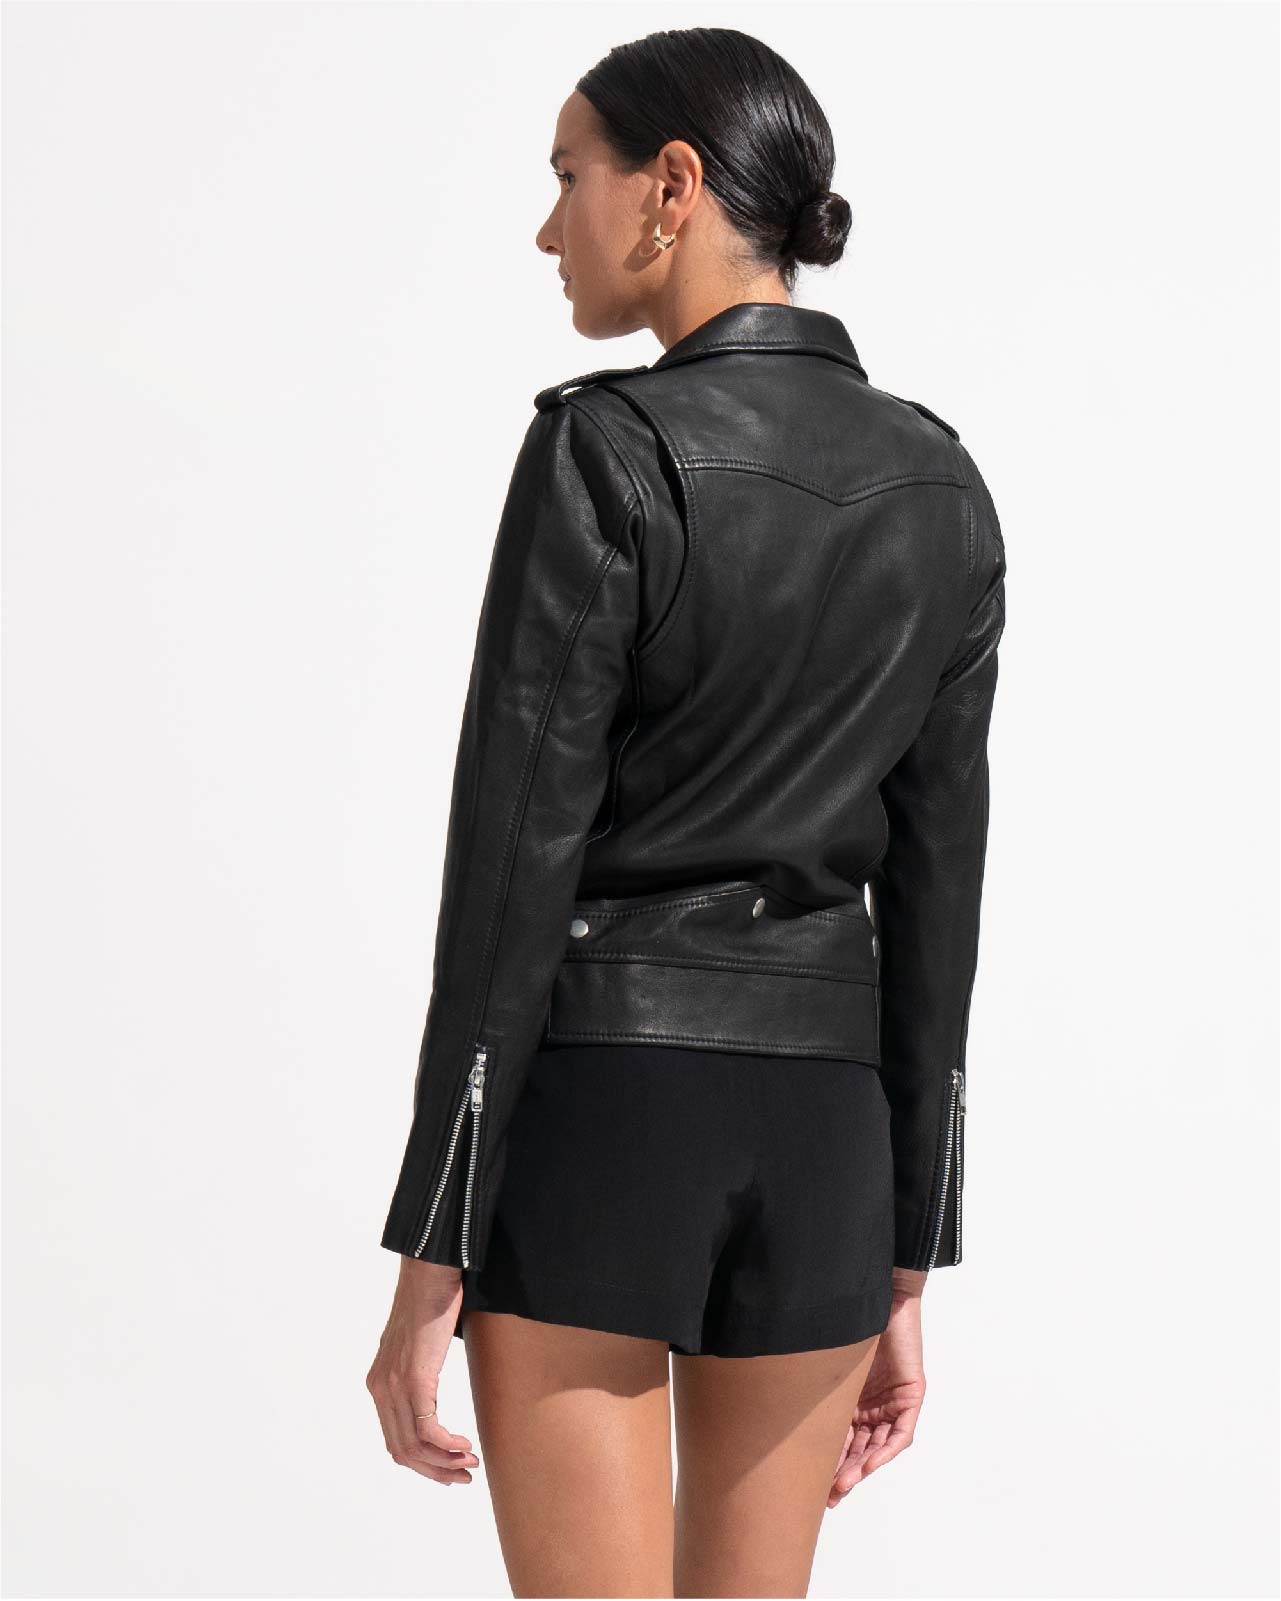 Morrato Jacket Biker Leather Jacket Black